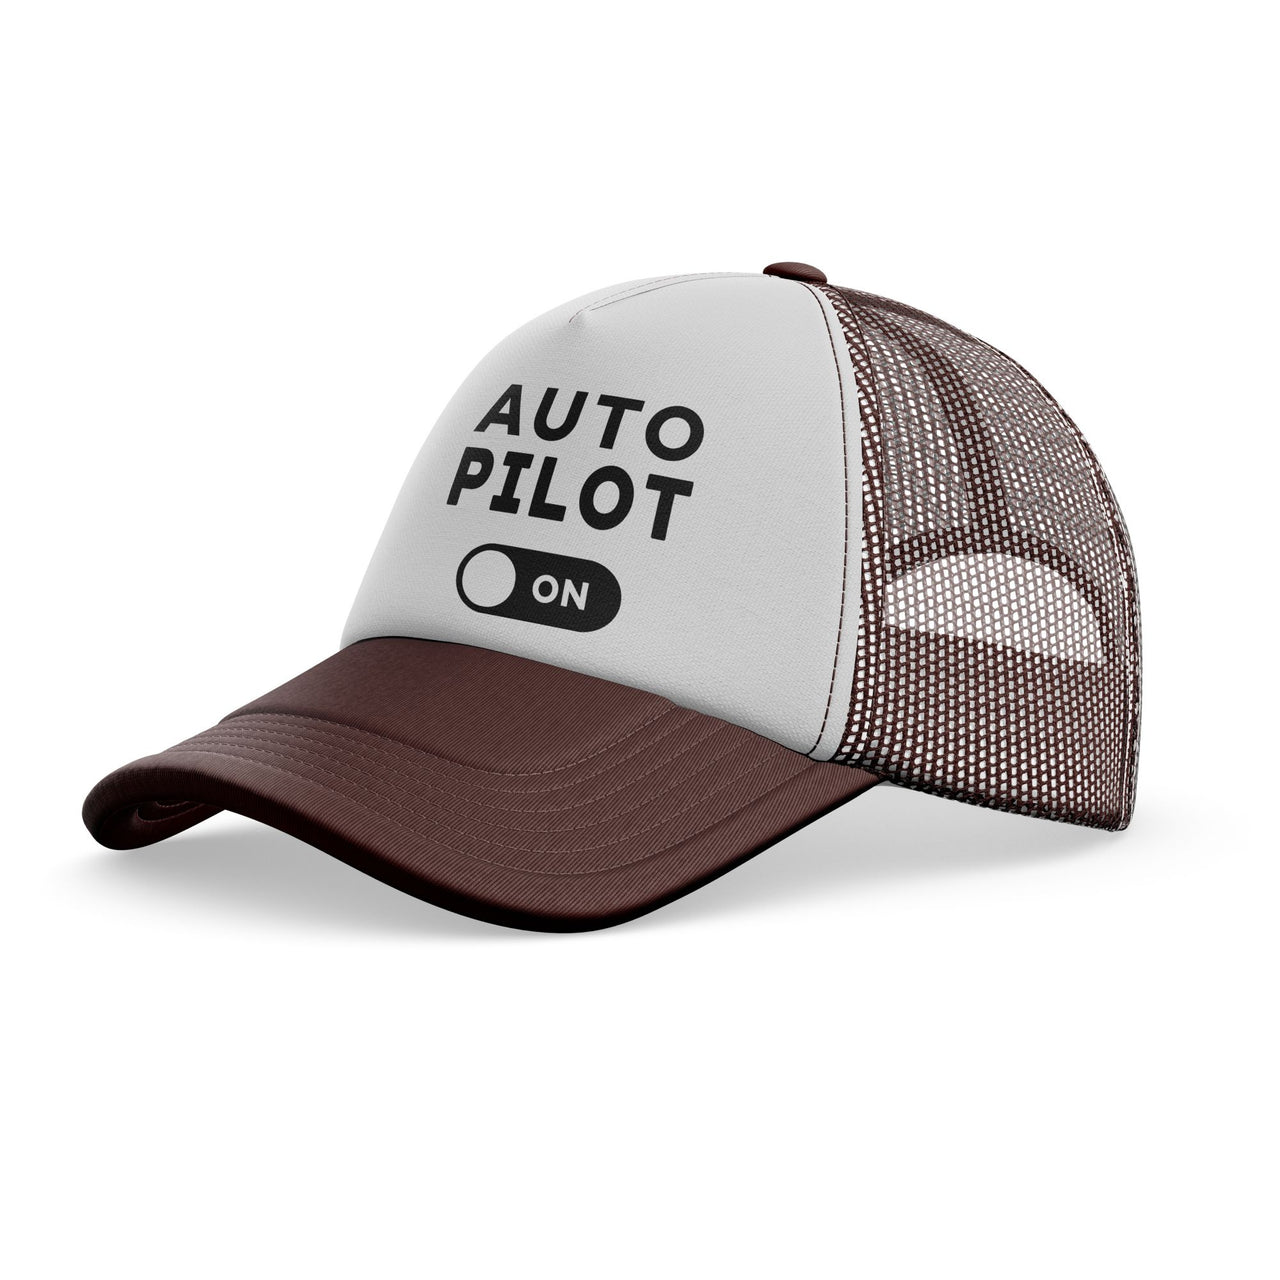 Auto Pilot ON Designed Trucker Caps & Hats